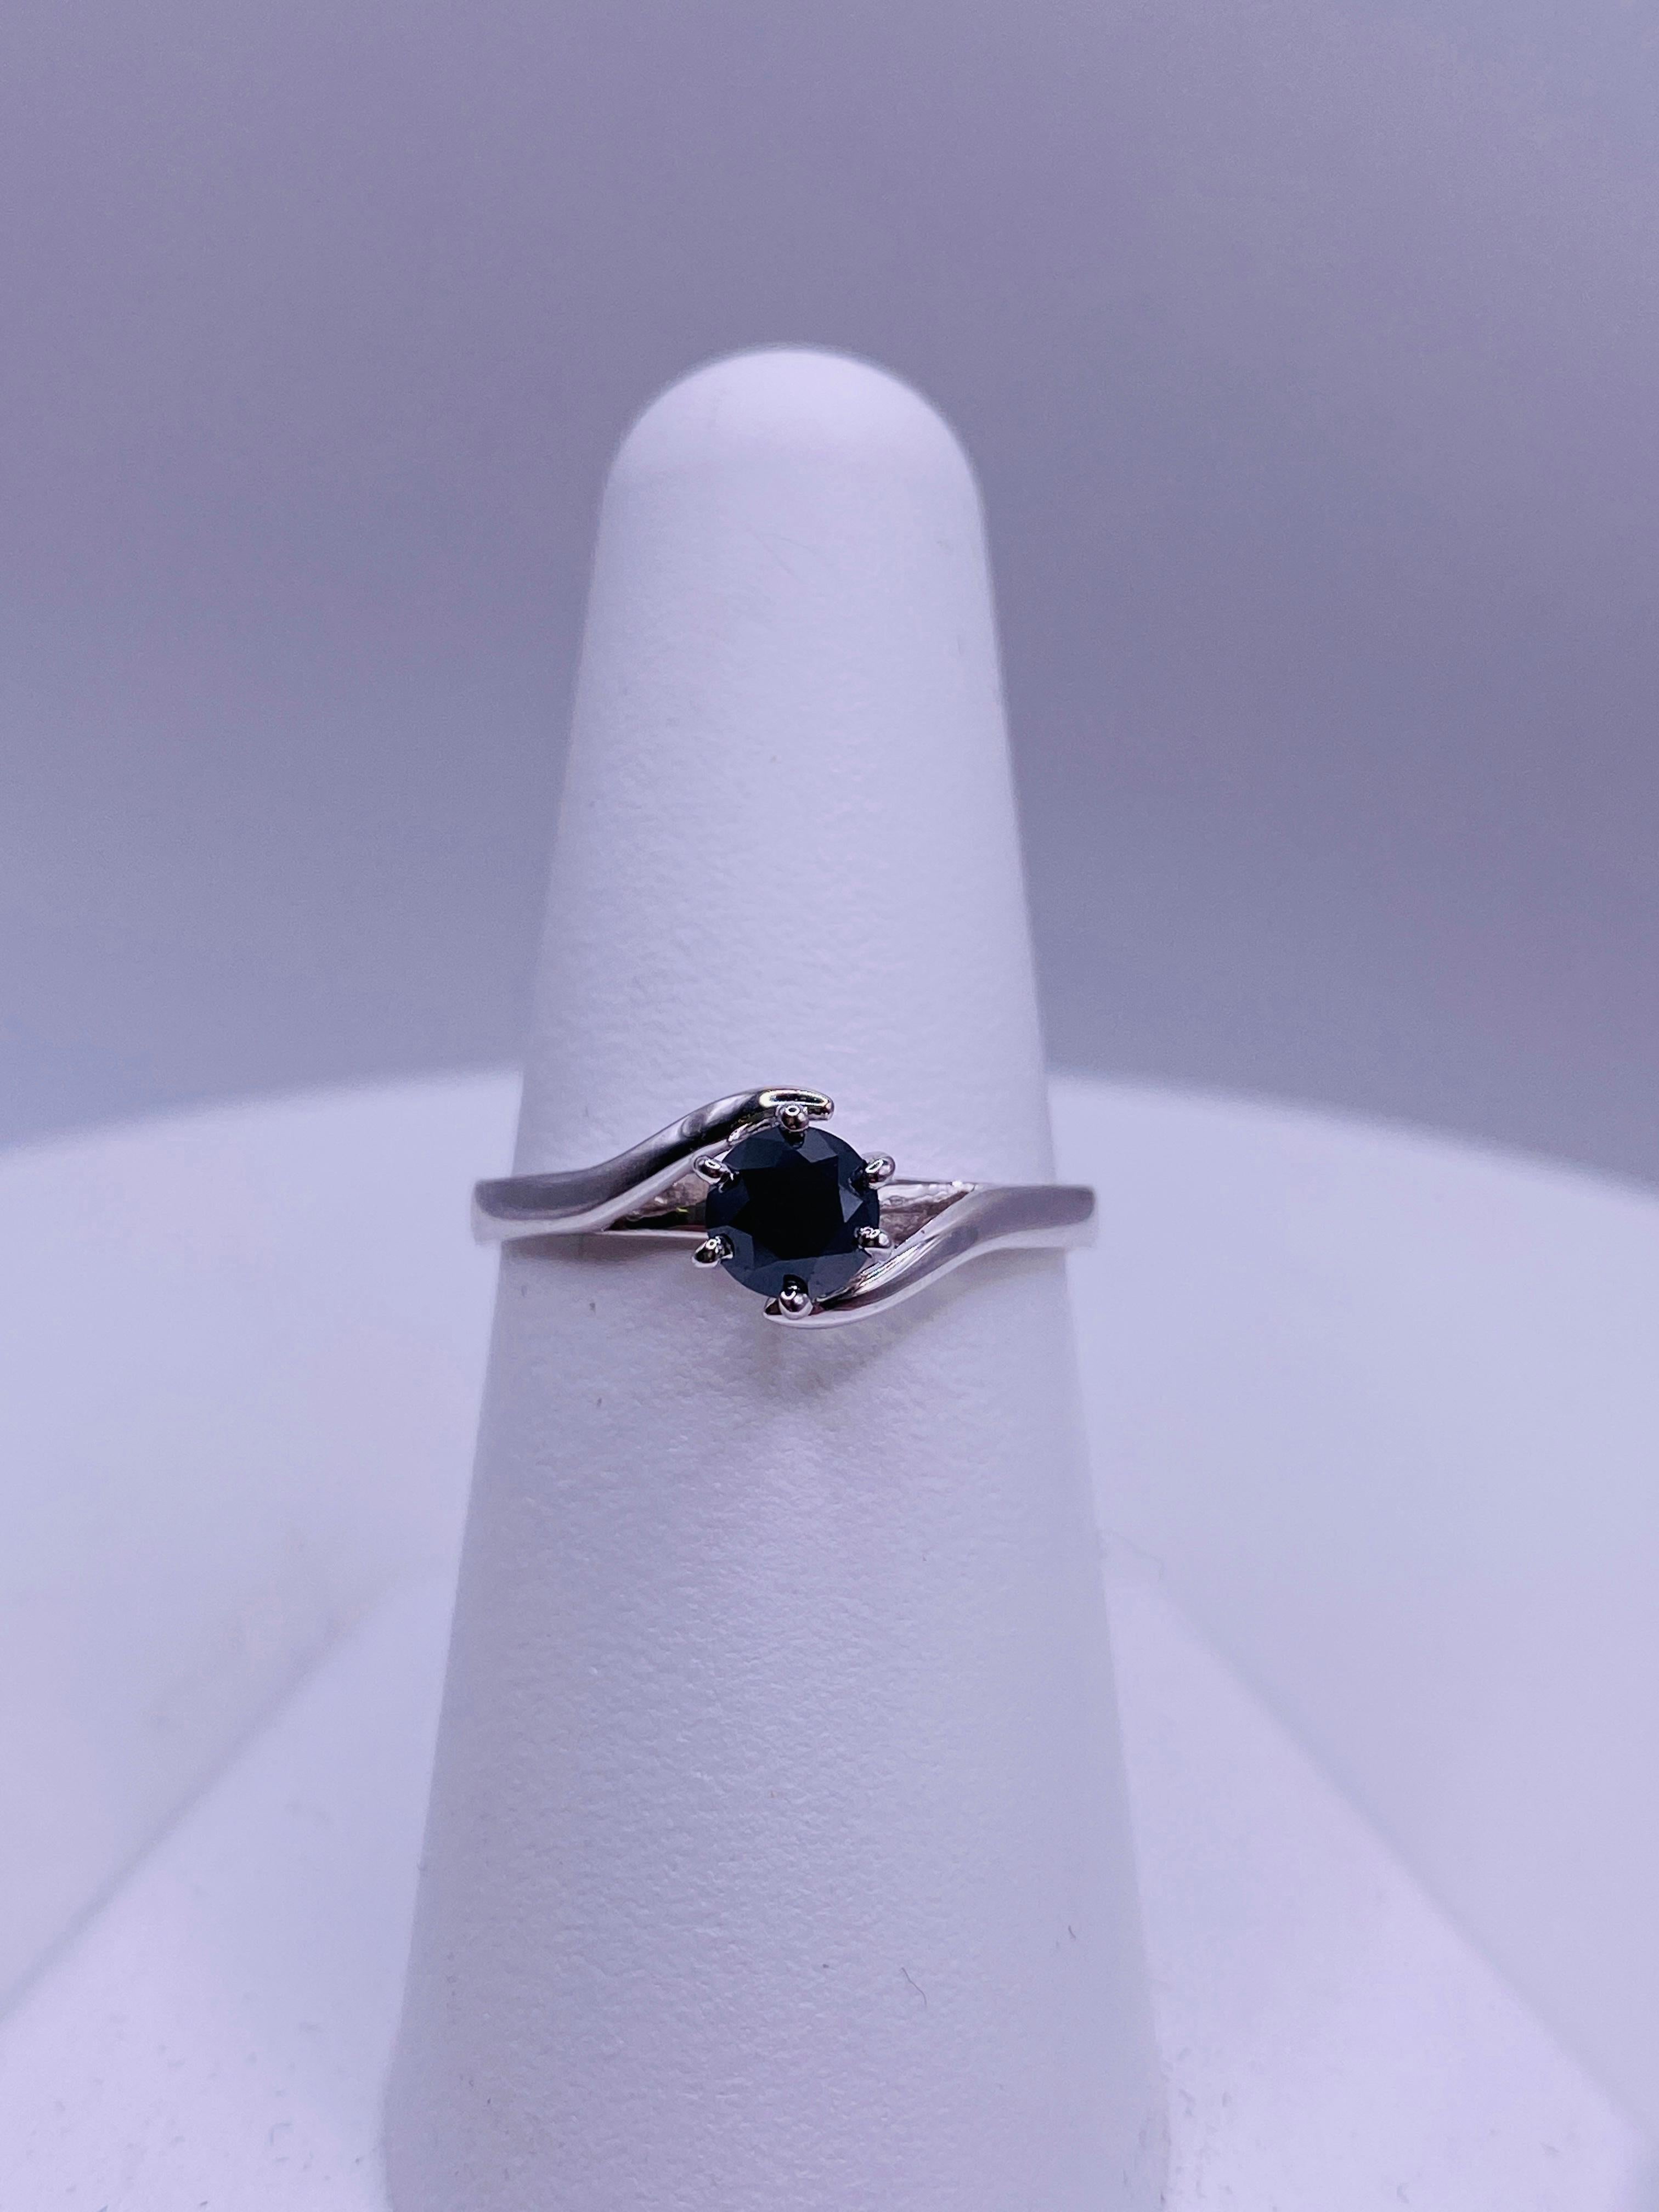 Engagement ring 10k white gold .40 carat black diamond. 1.2Dwt. Size 7 US